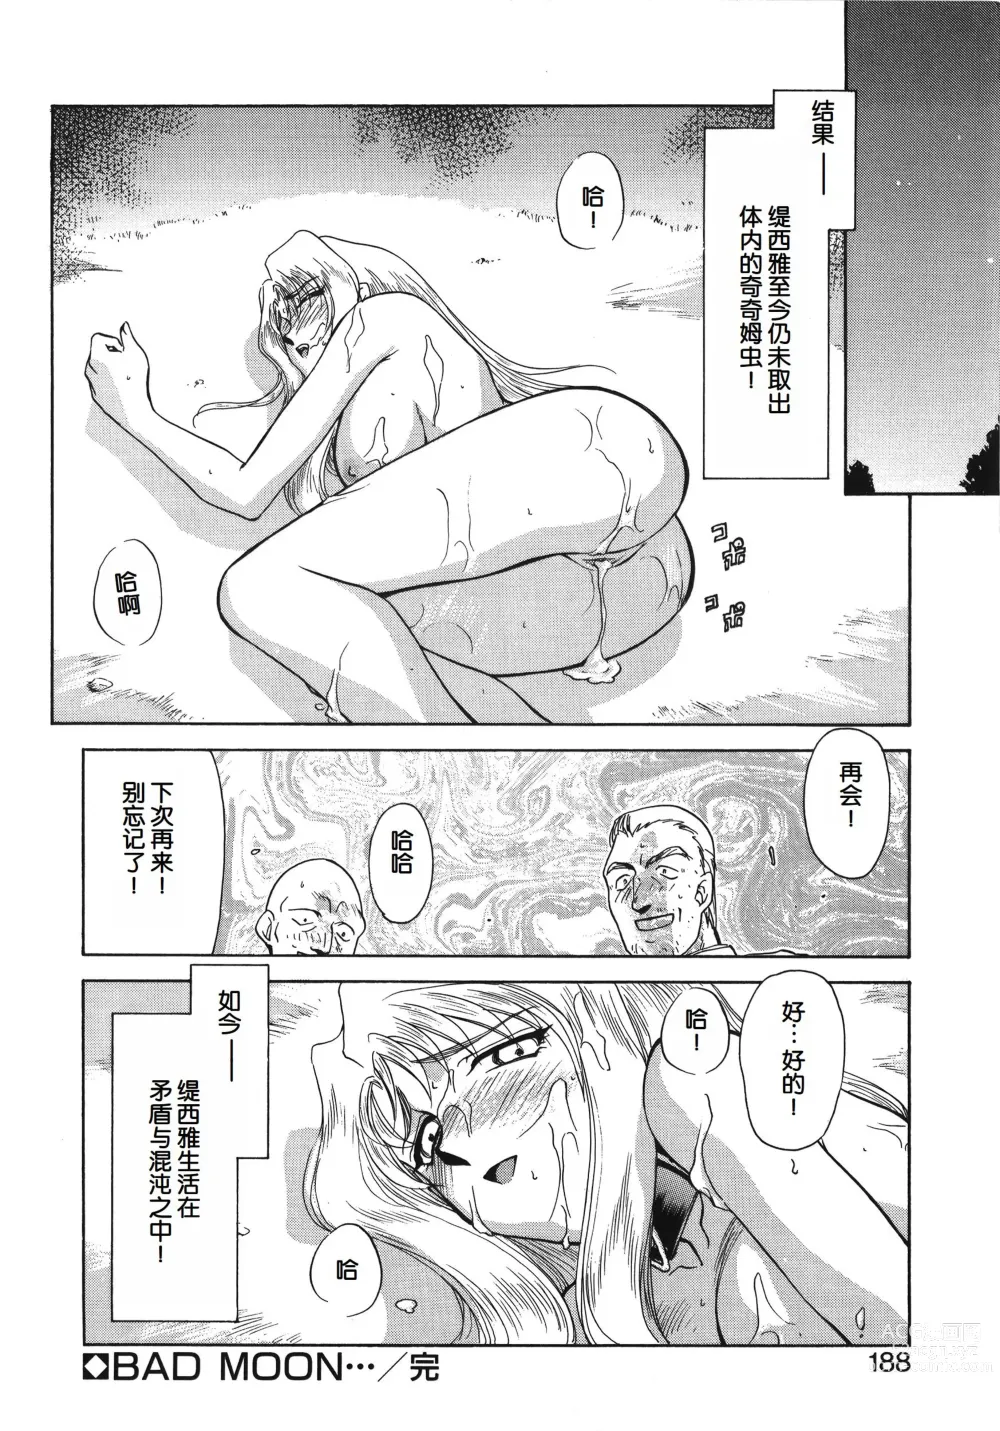 Page 188 of manga Bad Moon...